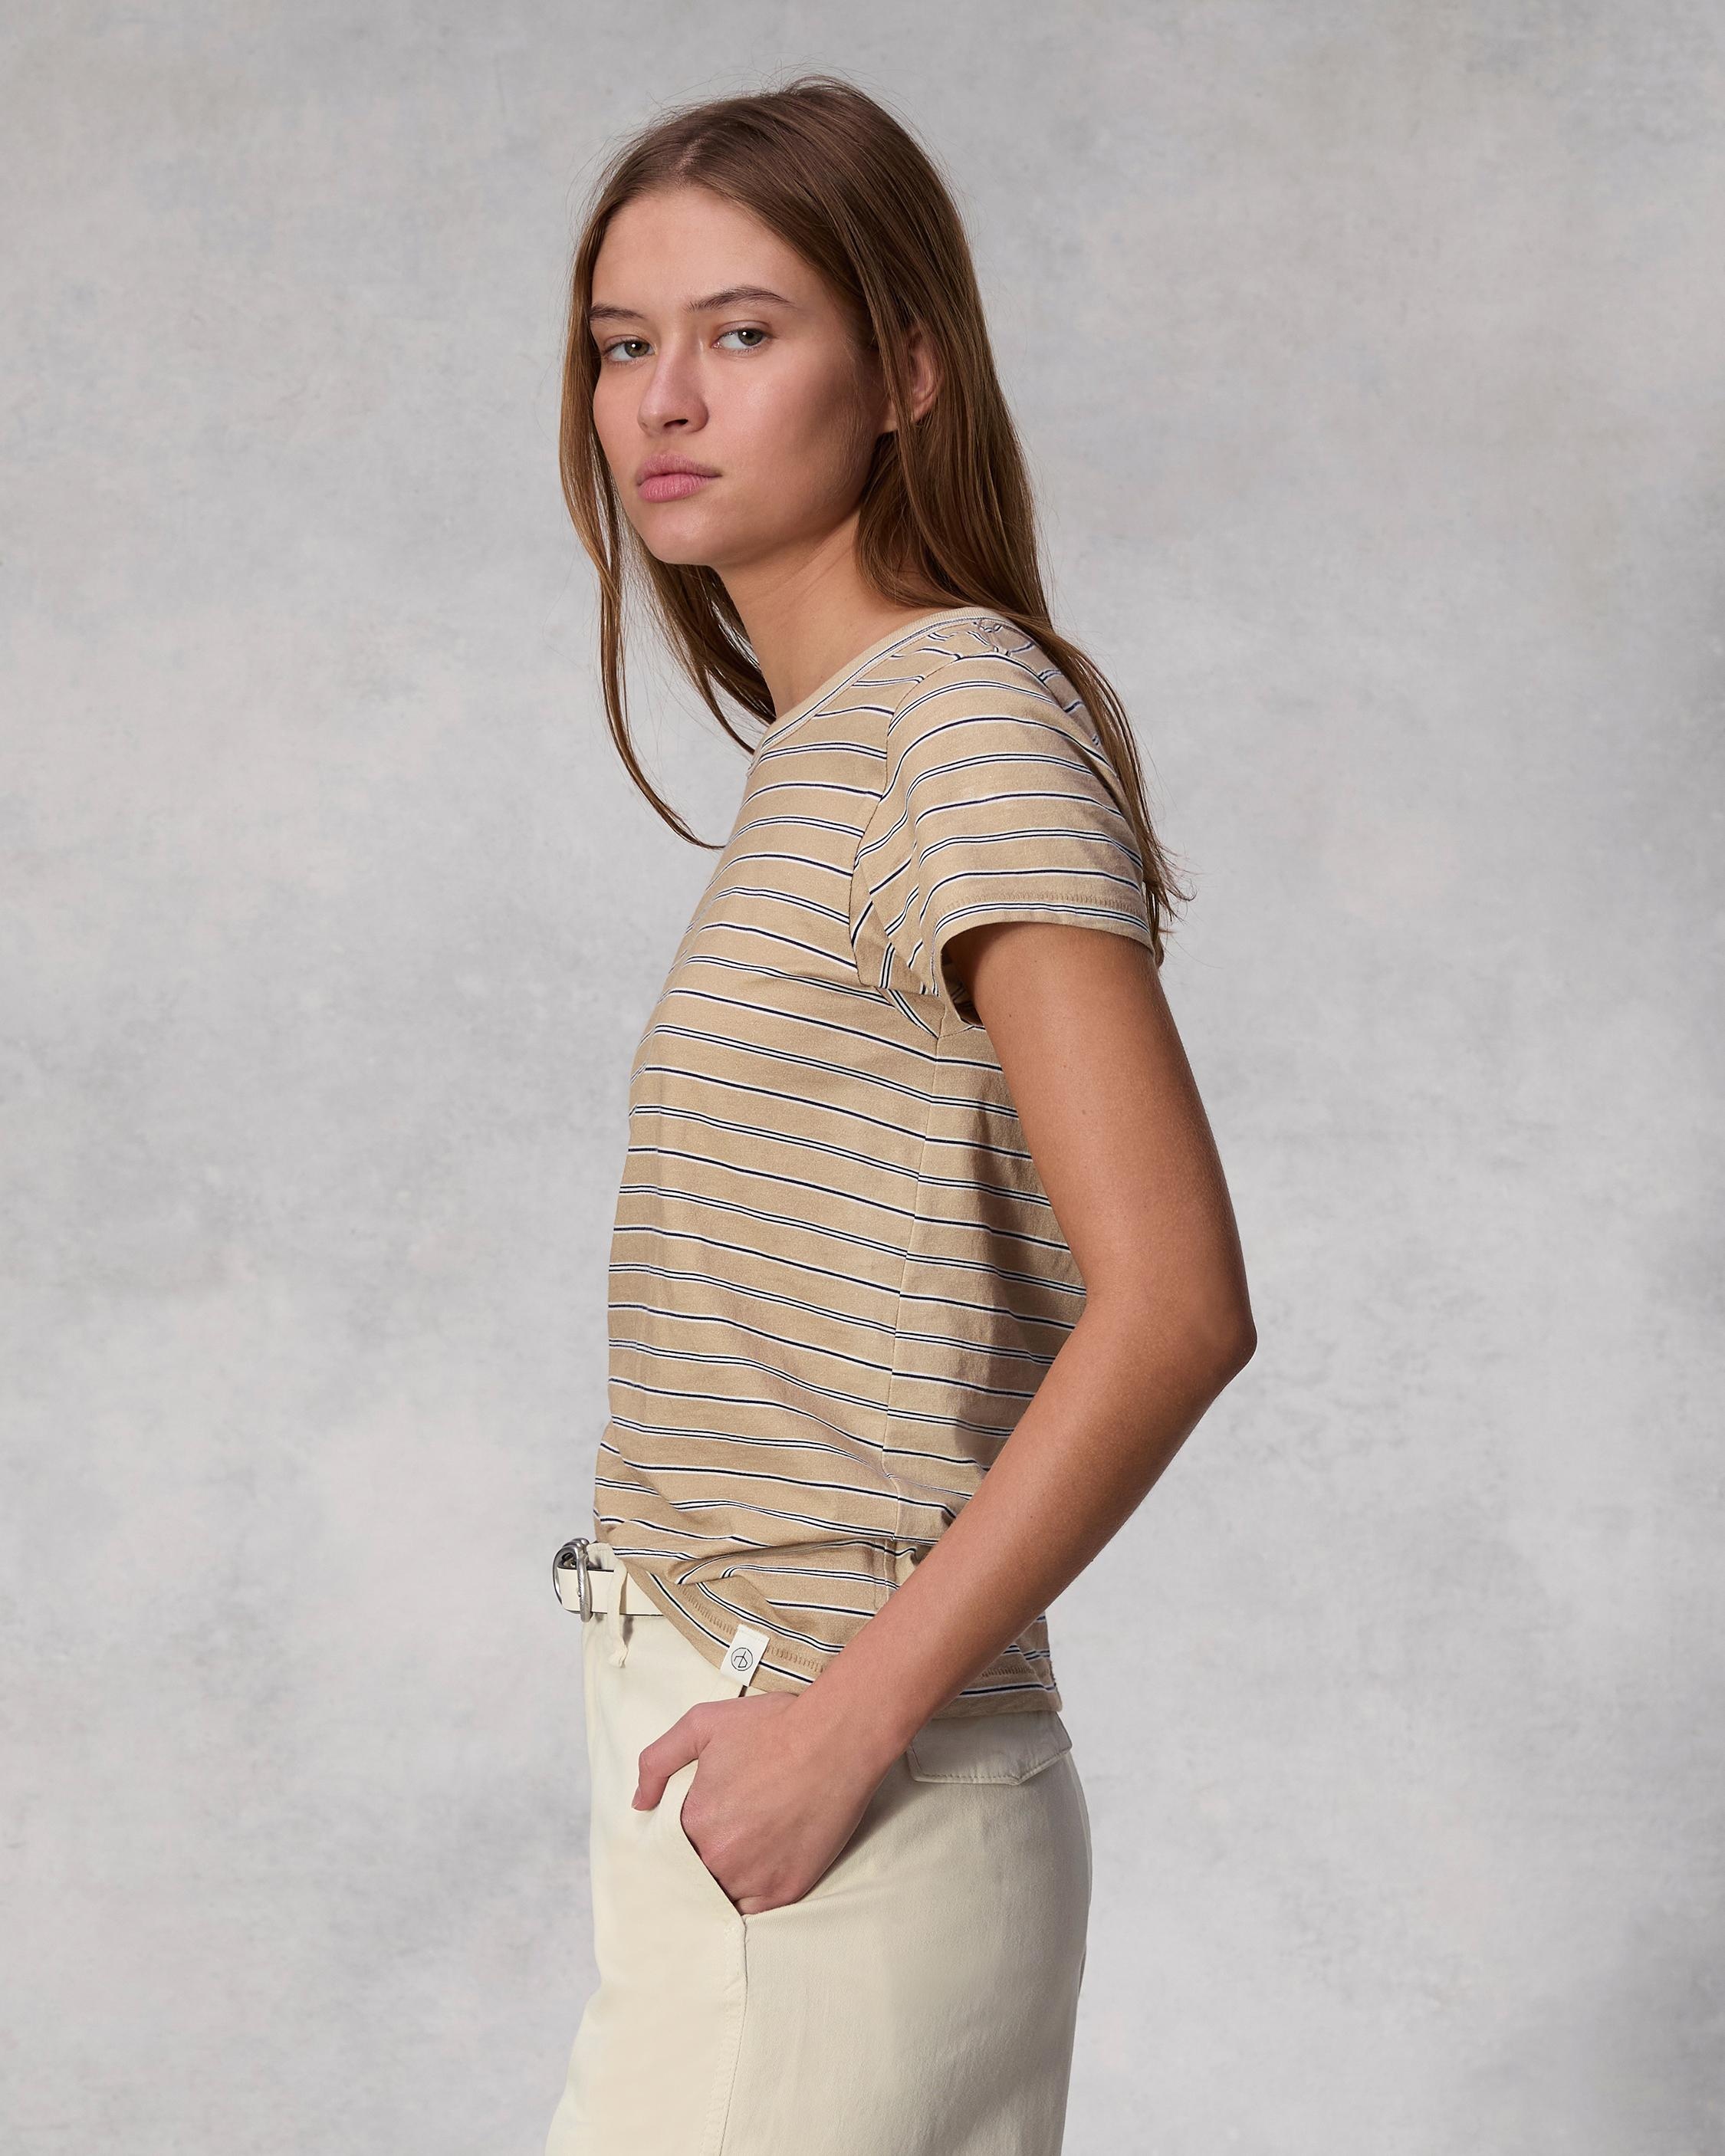 The Slub Stripe Tee
Cotton T-Shirt - 4